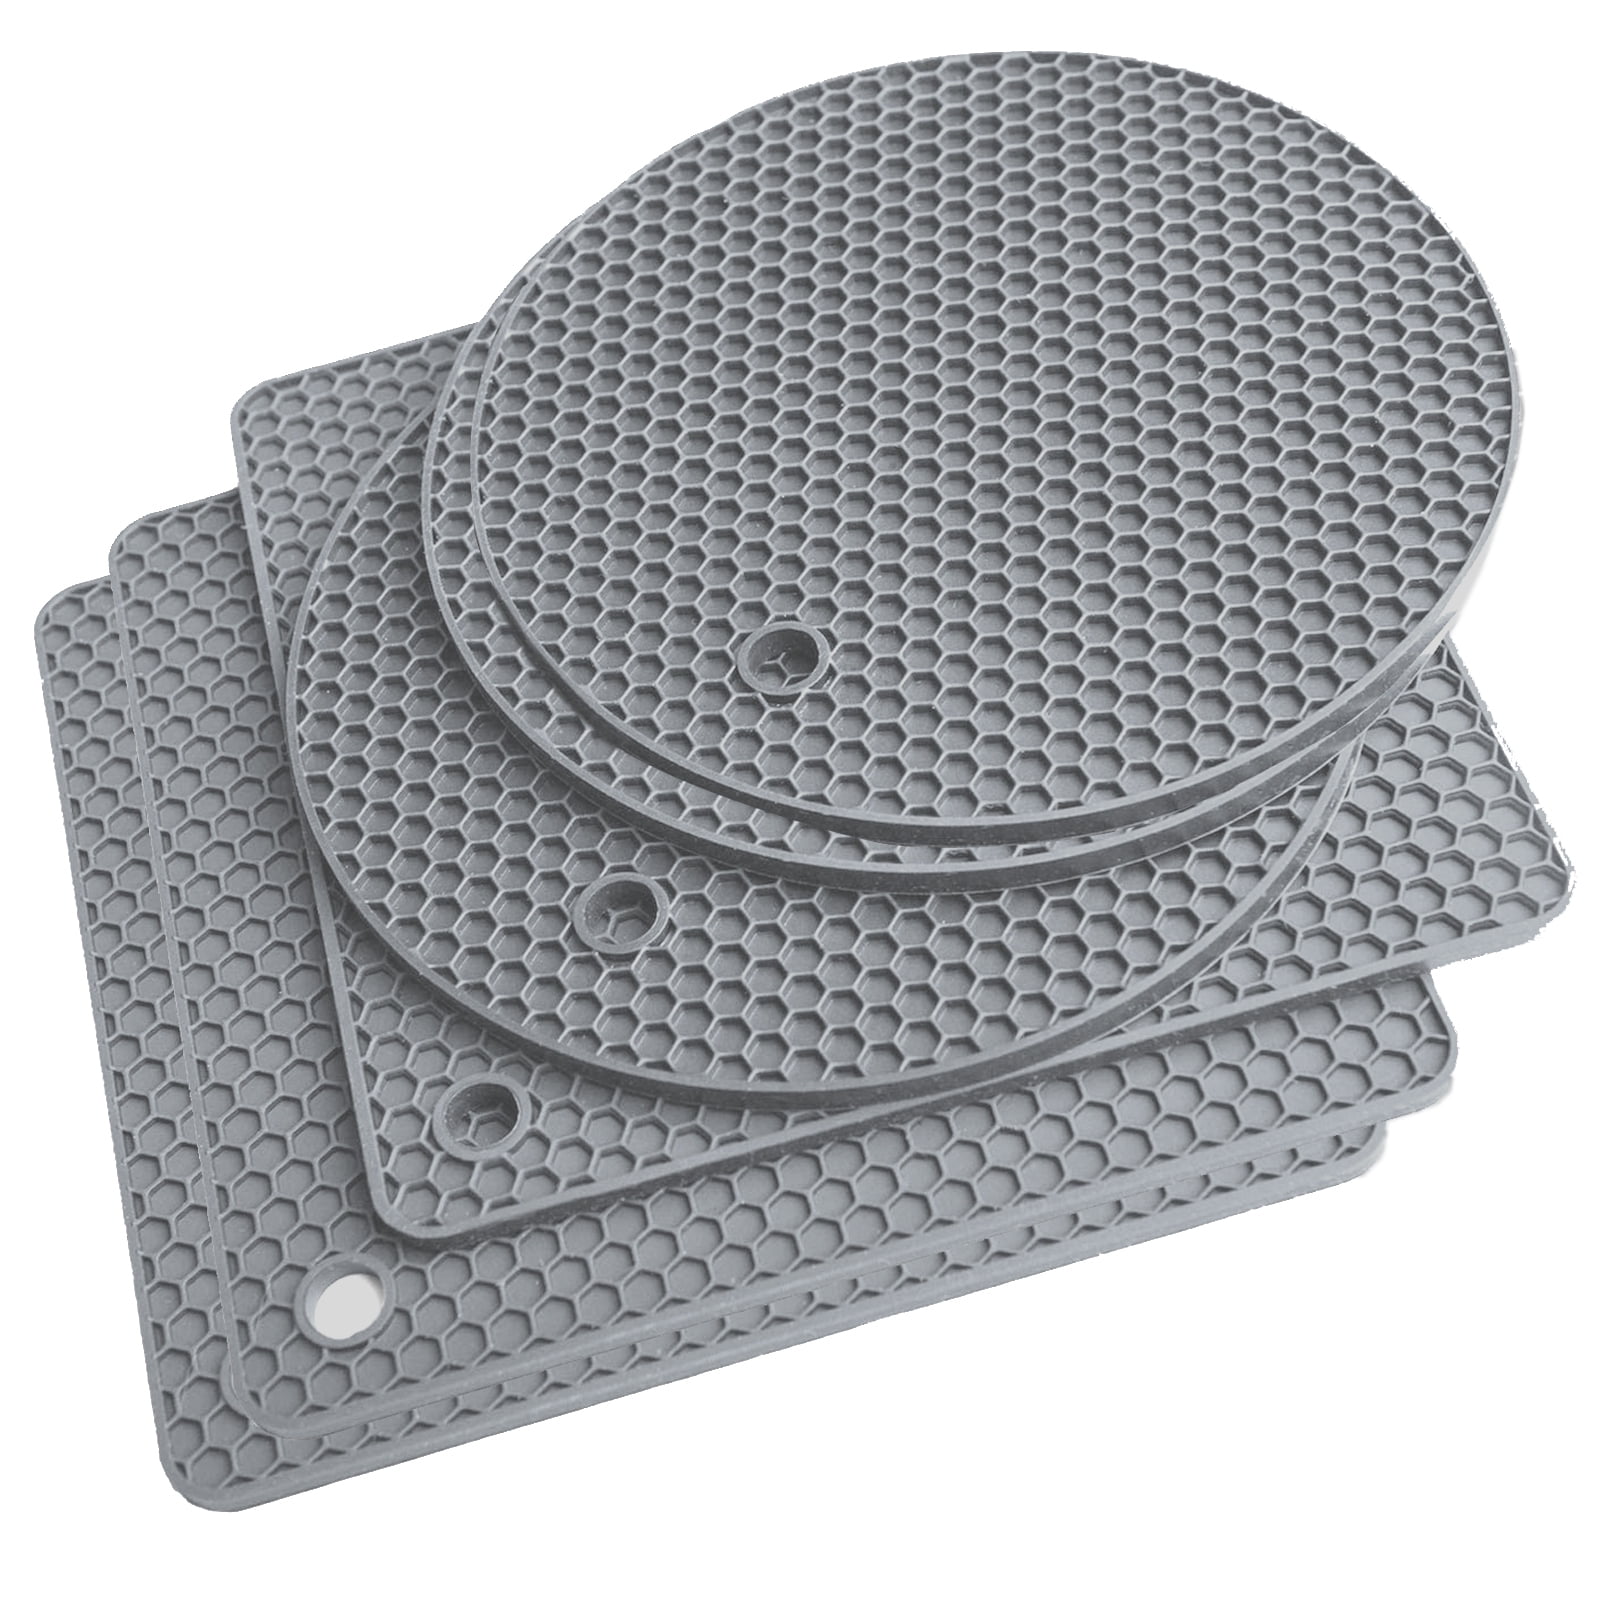 Dropship 6 Pieces Non-Slip Pot Holders Heat Resistant Insulation